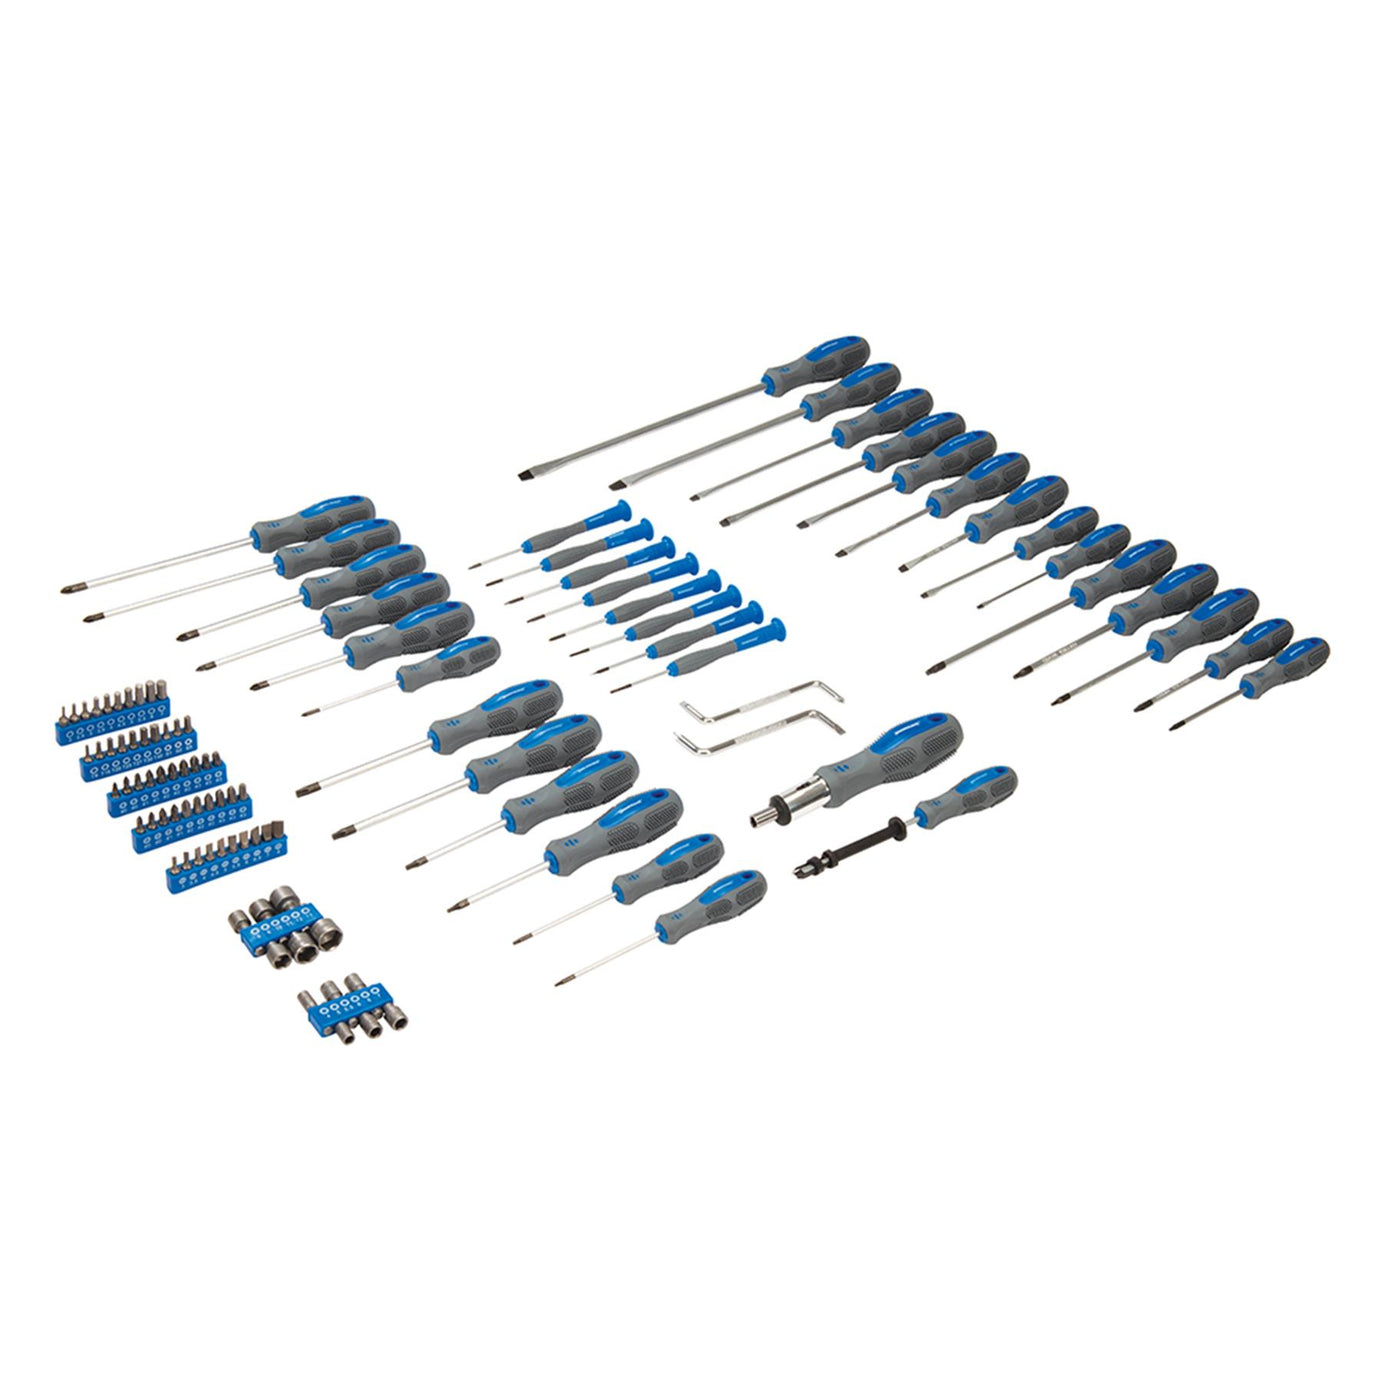 Screwdriver Set 100pc Hardened Chrome Vanadium Blades And Tips Soft-grip handles